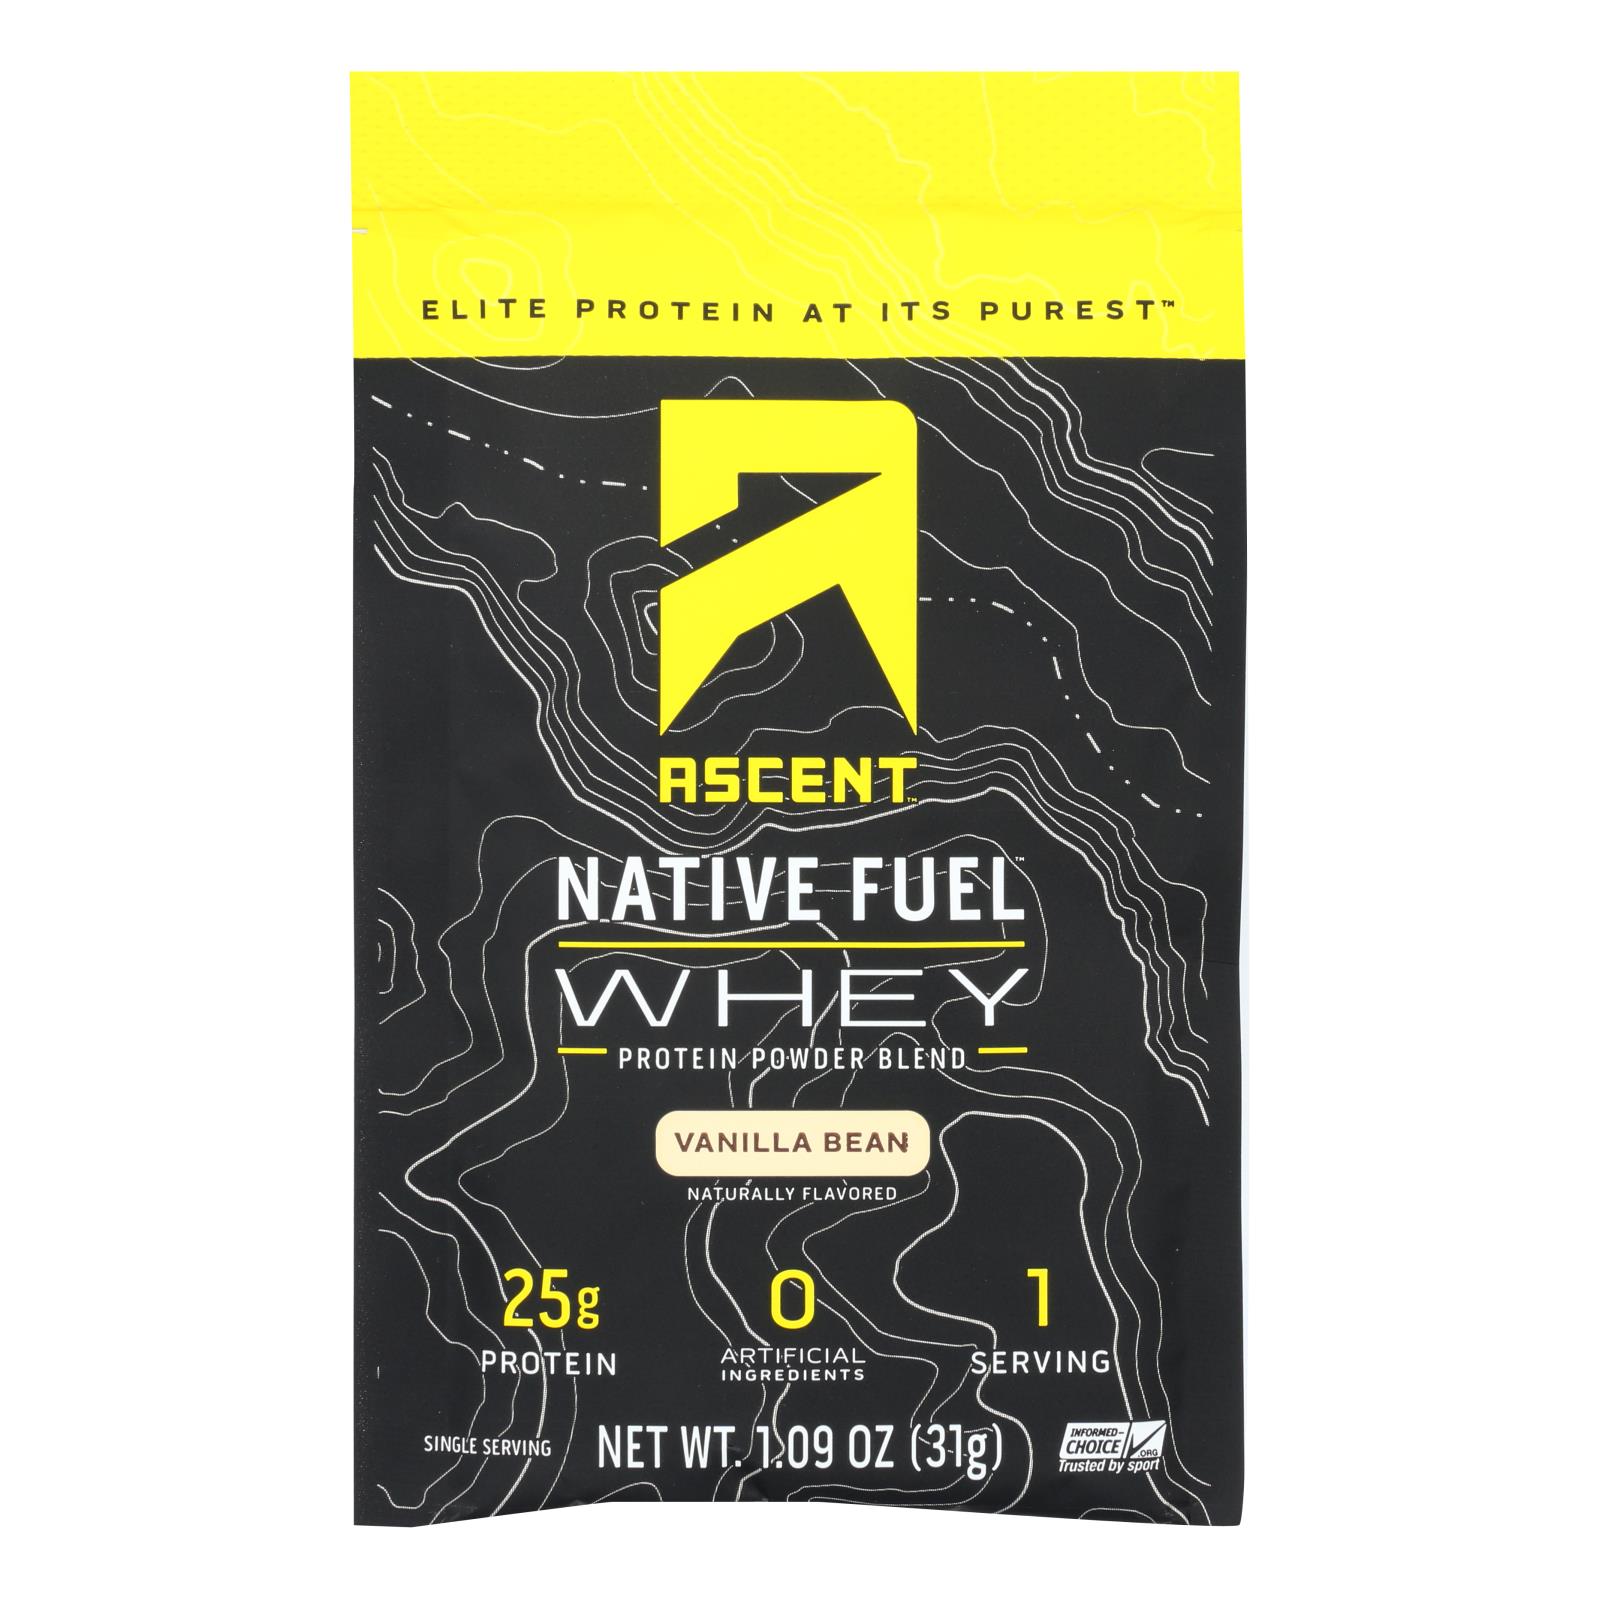 Ascent Native Fuel Whey Protein Powder Blend Vanilla Bean - 15개 묶음상품 - 1.09 OZ